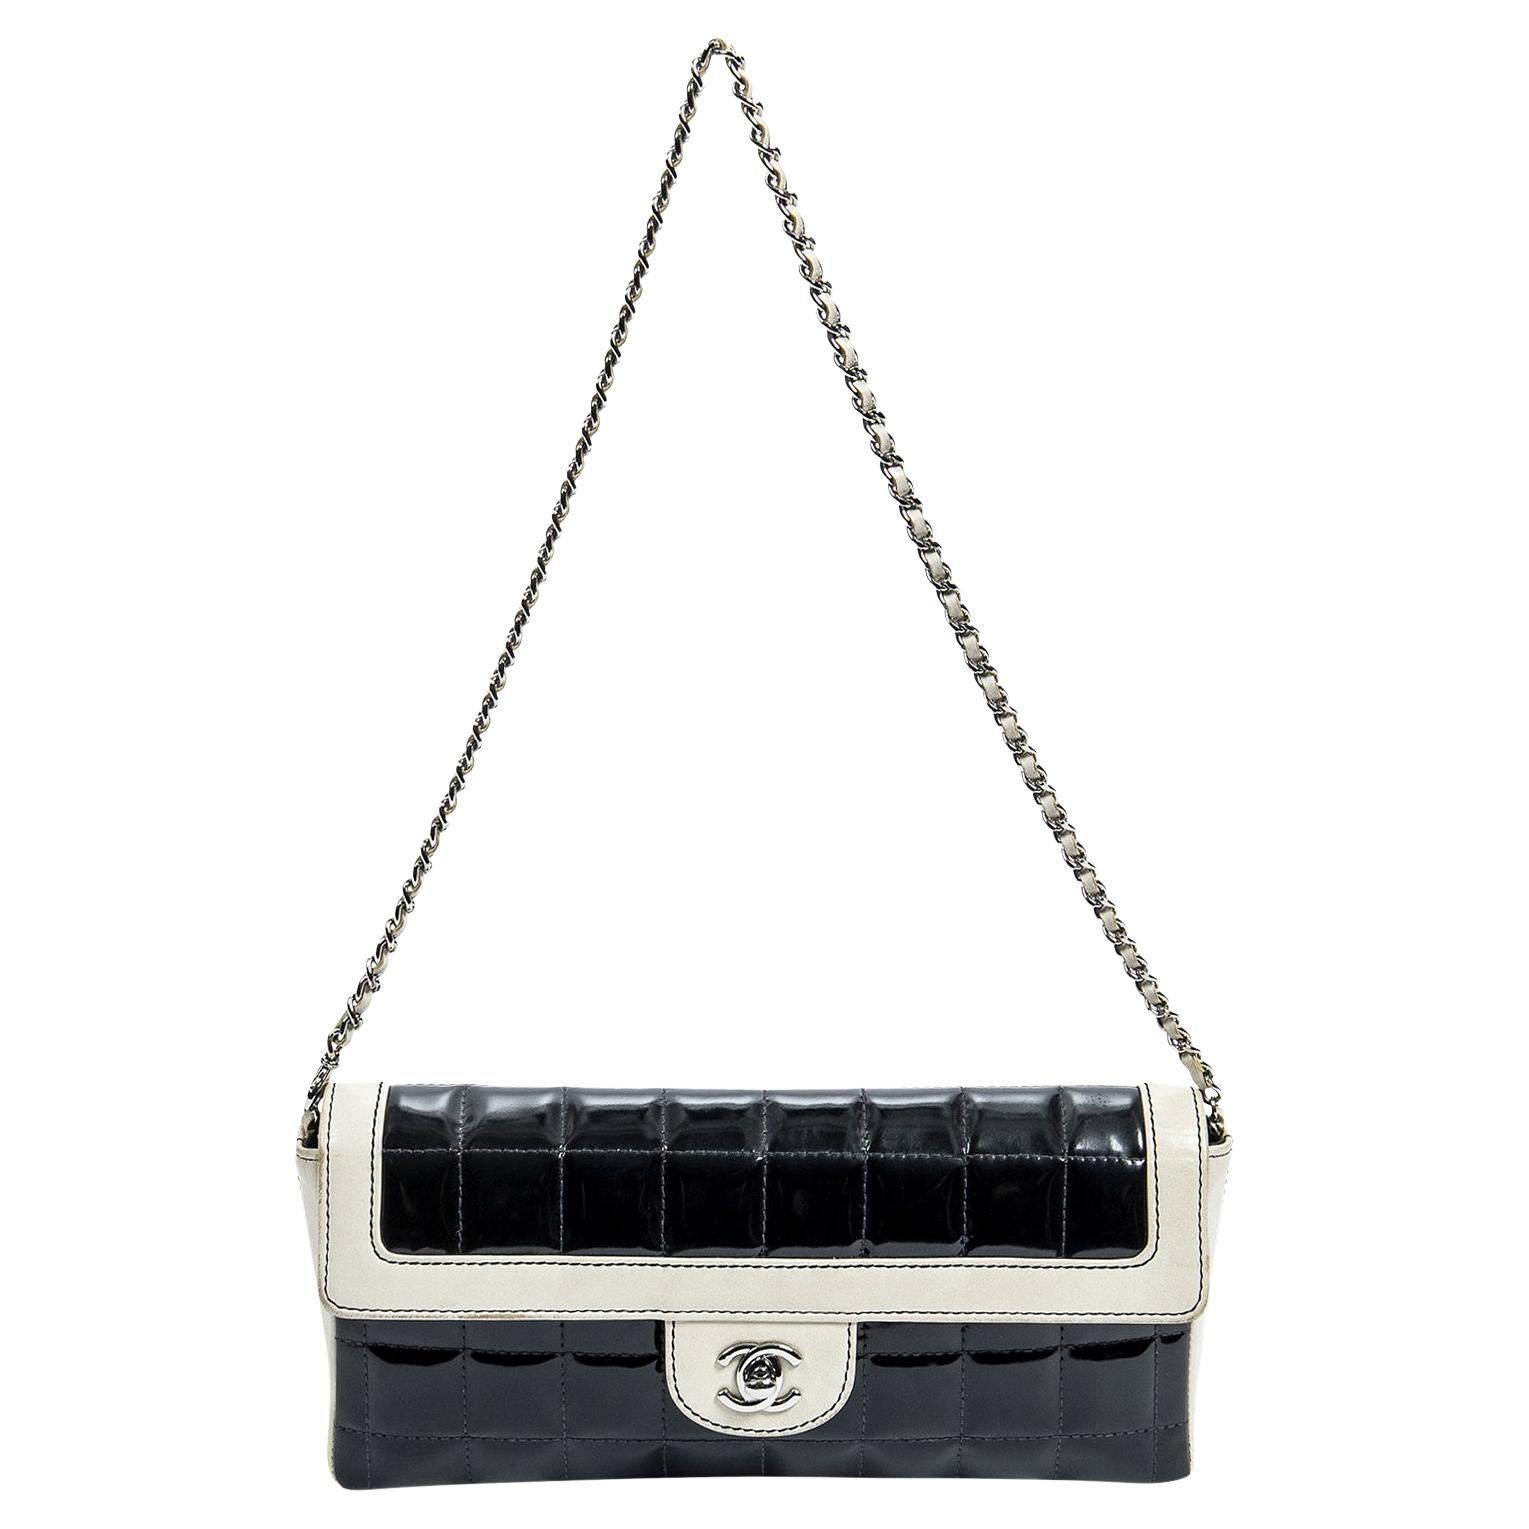 Chanel Bag 2000 - 491 For Sale on 1stDibs